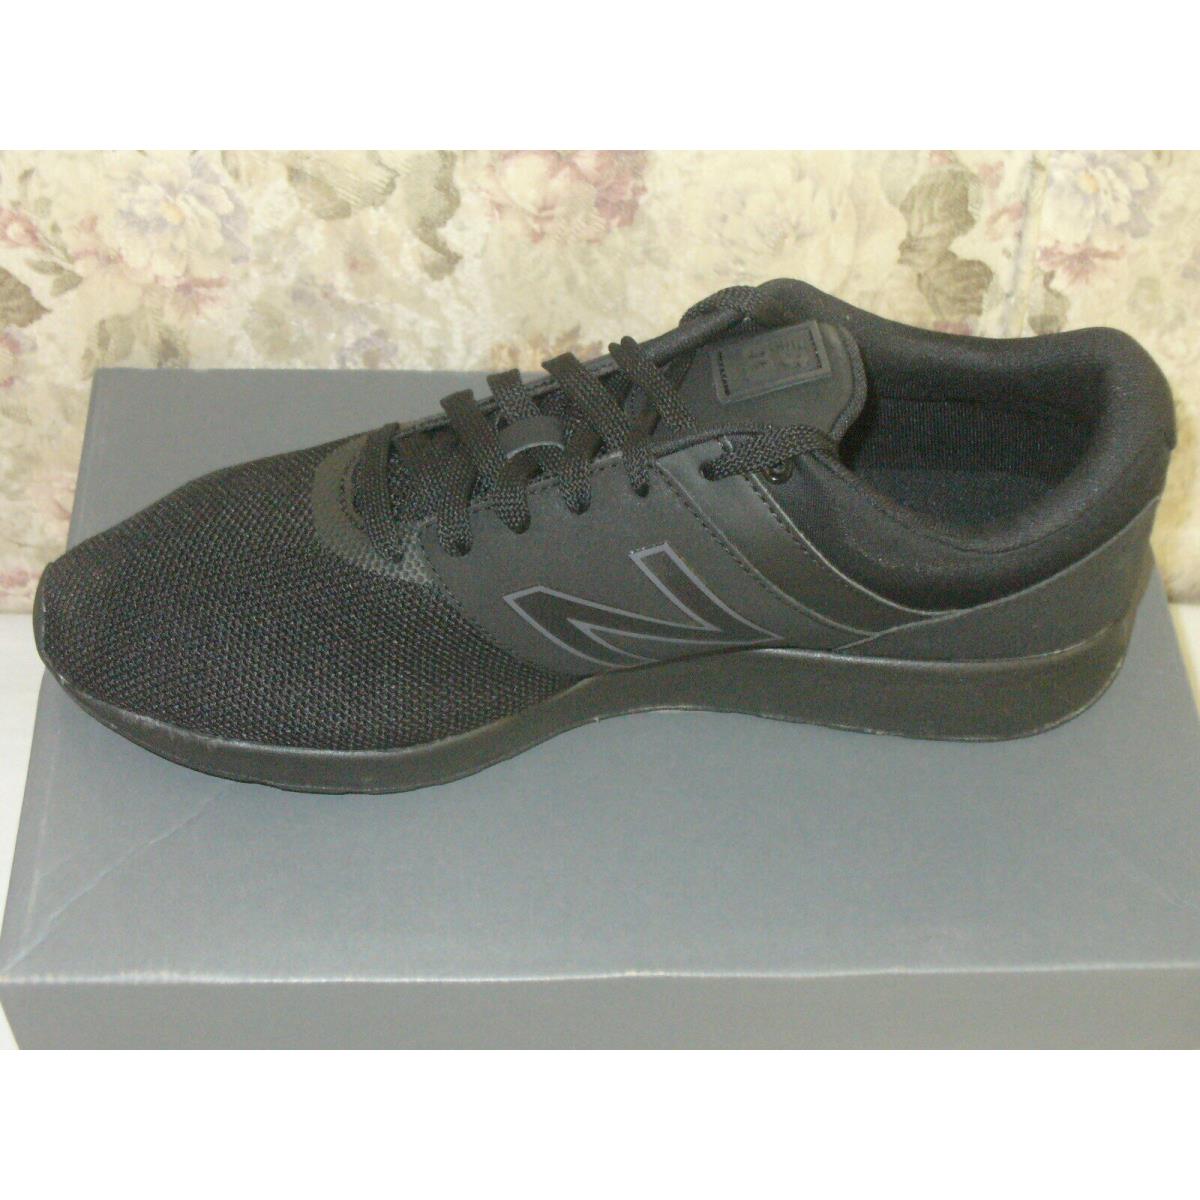 New Balance Men`s Mrl24 Ankle-high Leather/fabric Black Athletic Shoe Sz 13D